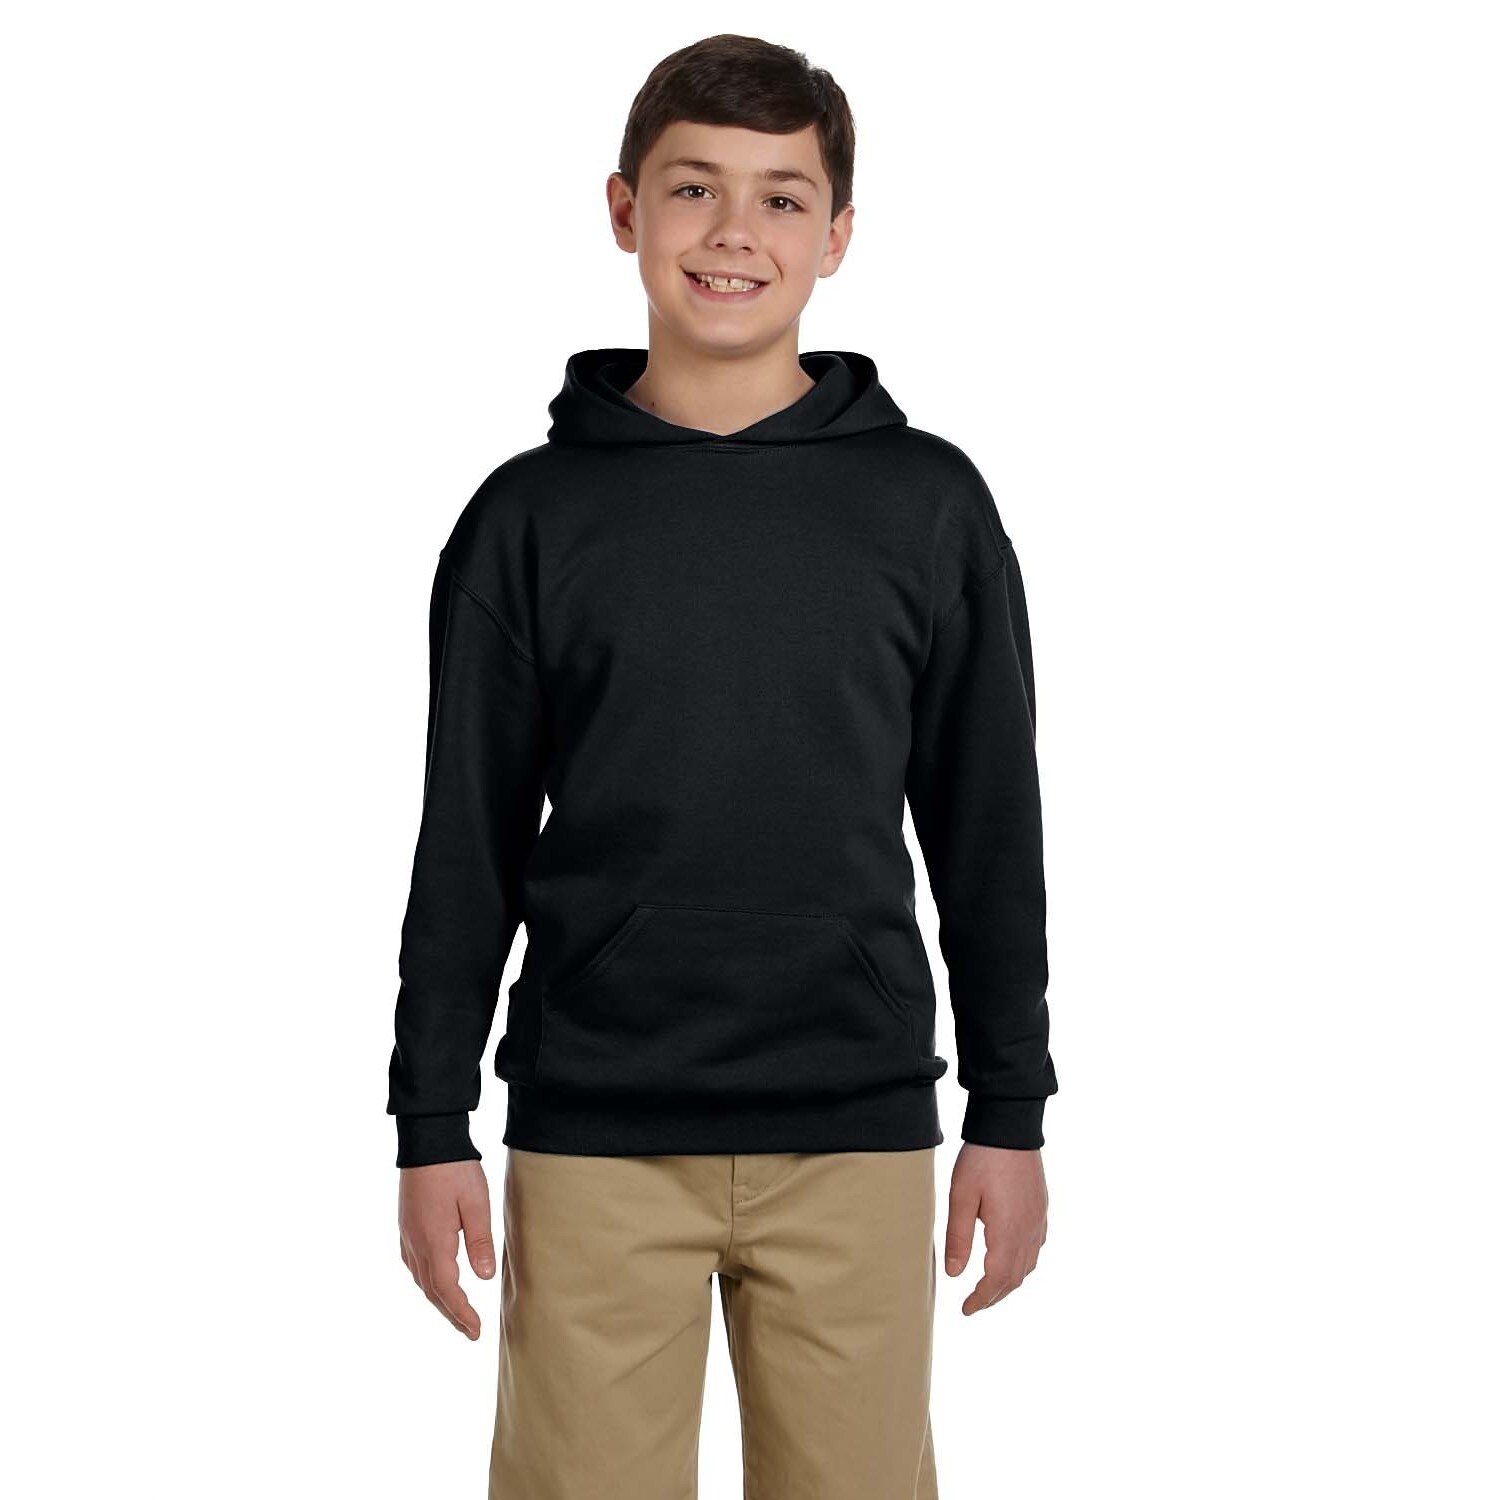 boys black hooded sweatshirt